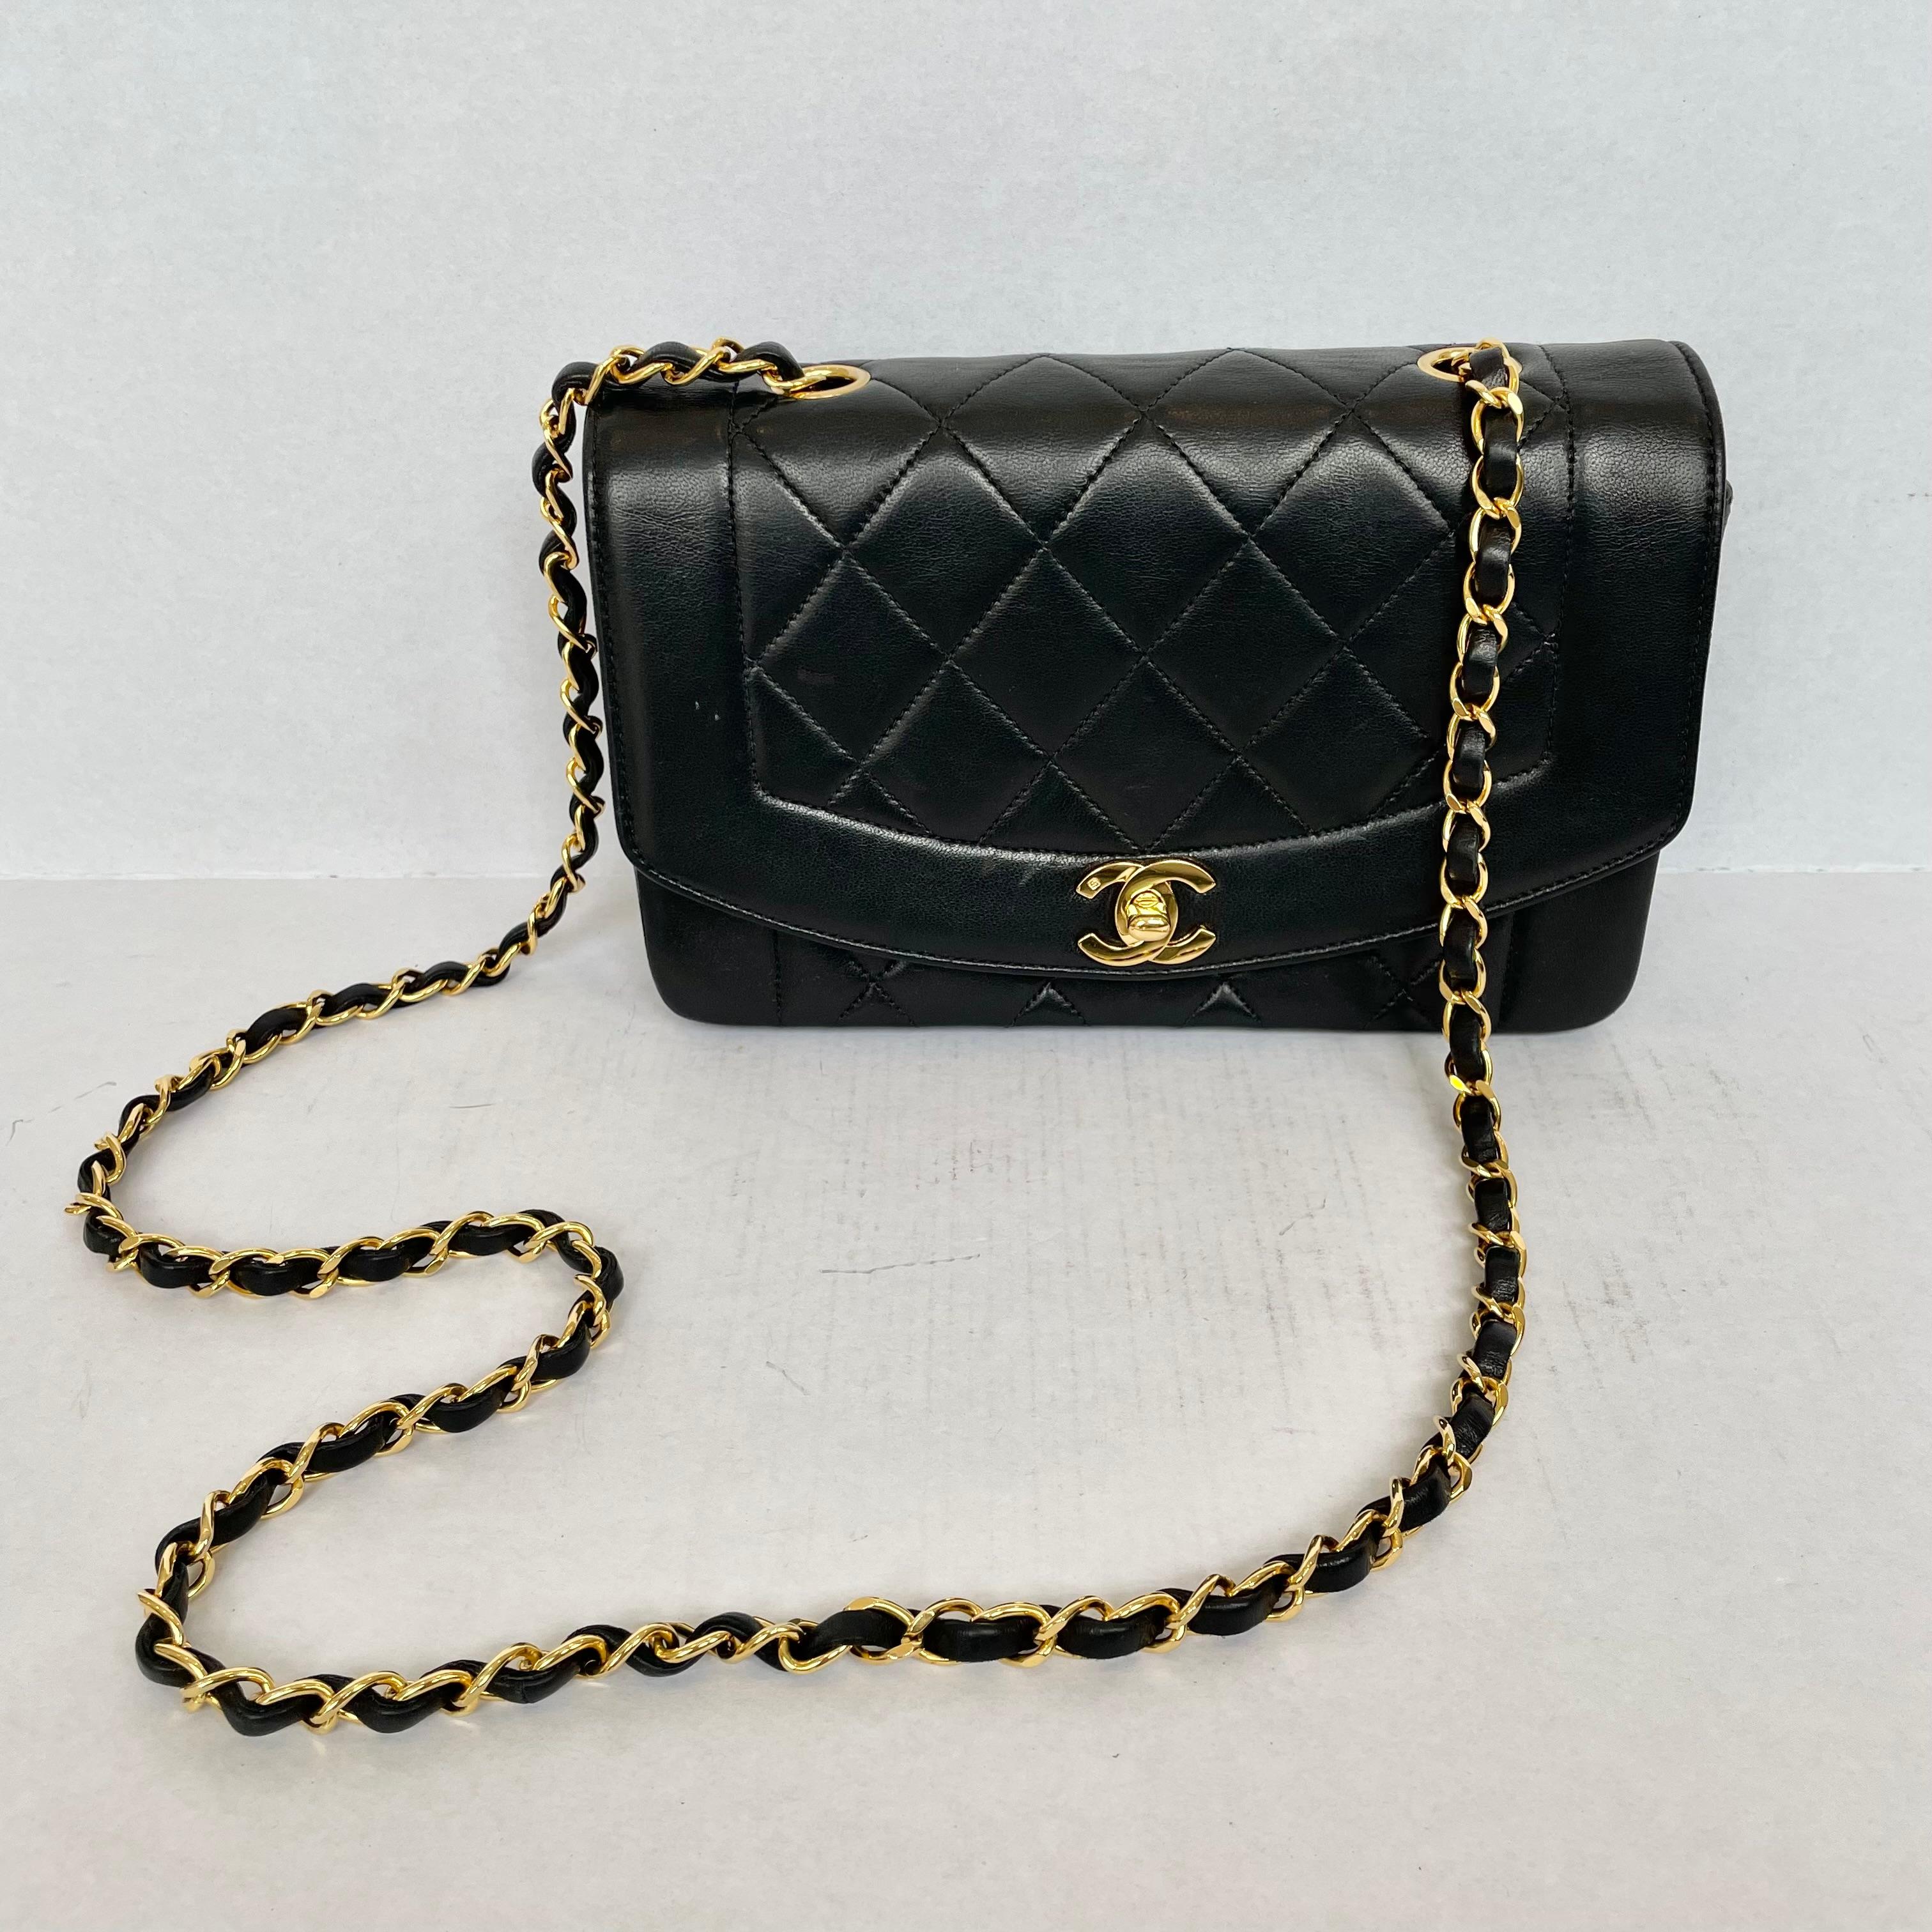 Rare Chanel Diana Shoulder Bag Black Quilted Lambskin Leather, 1990s France For Sale 12